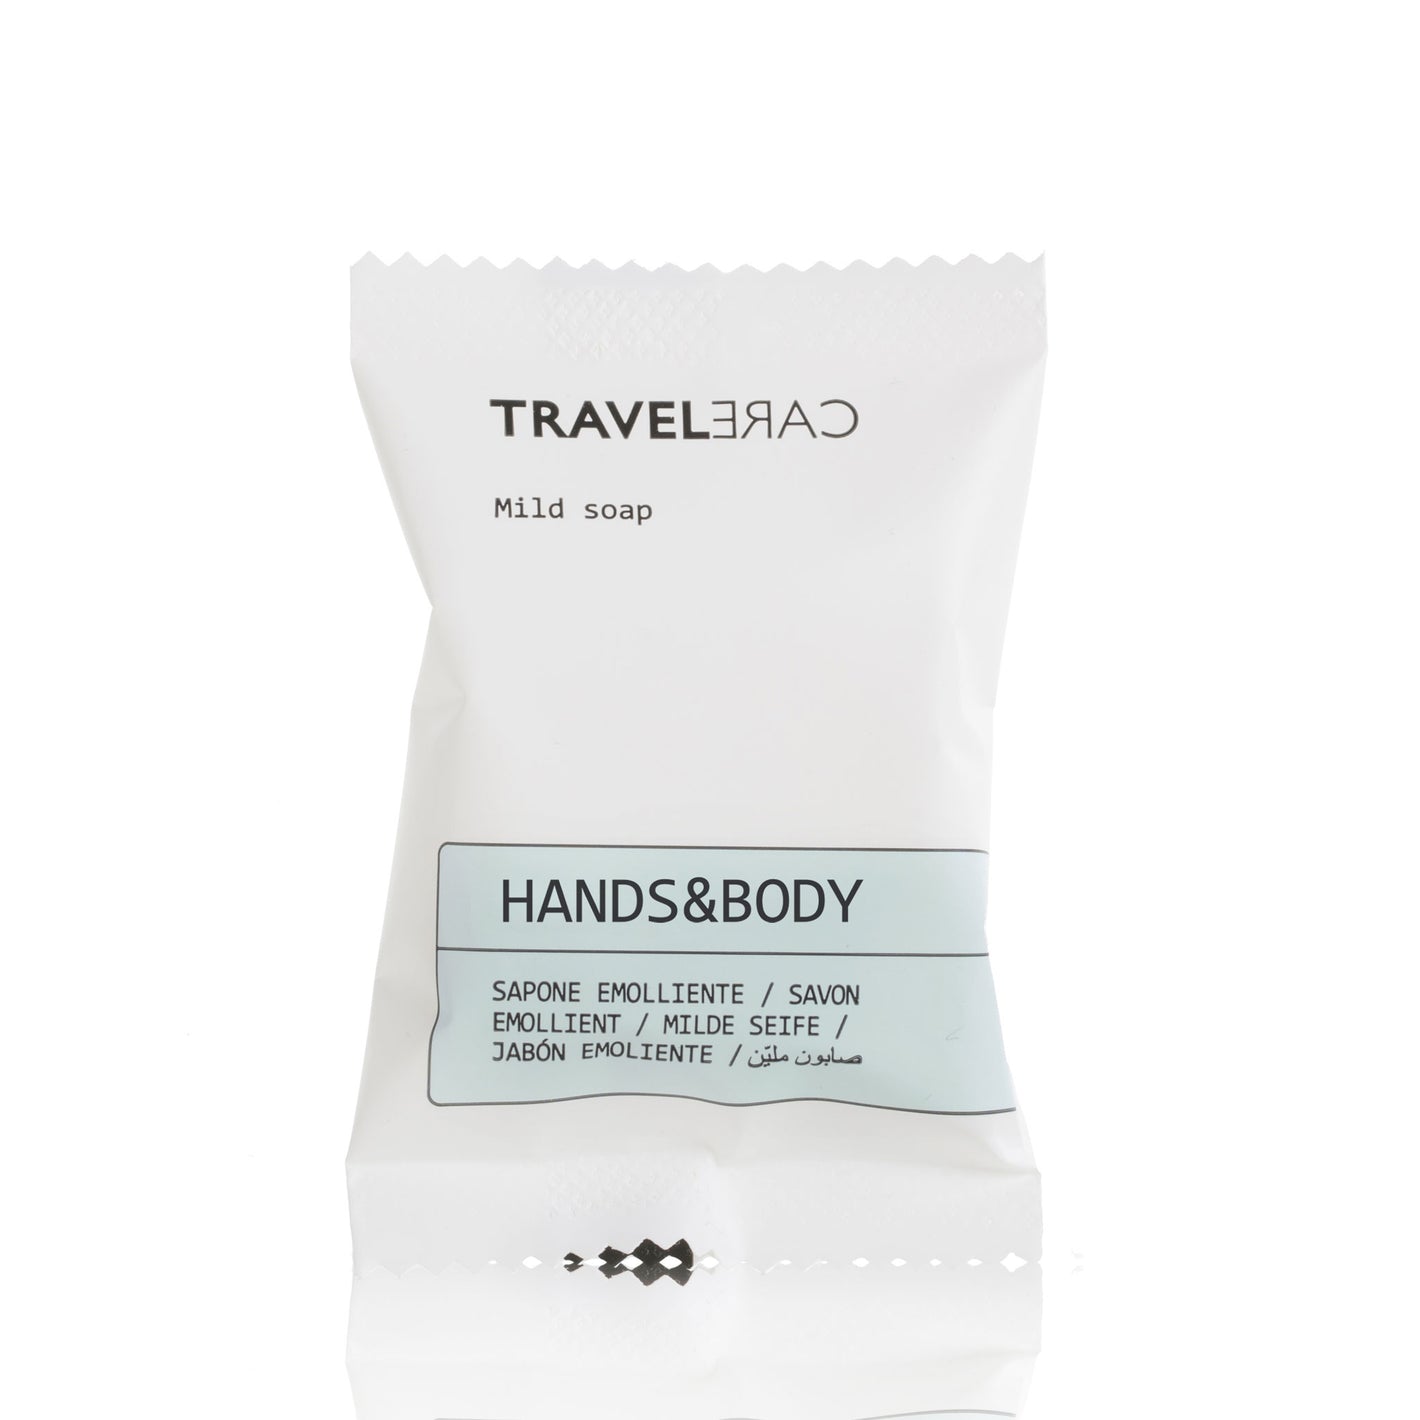 TravelCare mild soap bar 15 grams flopack